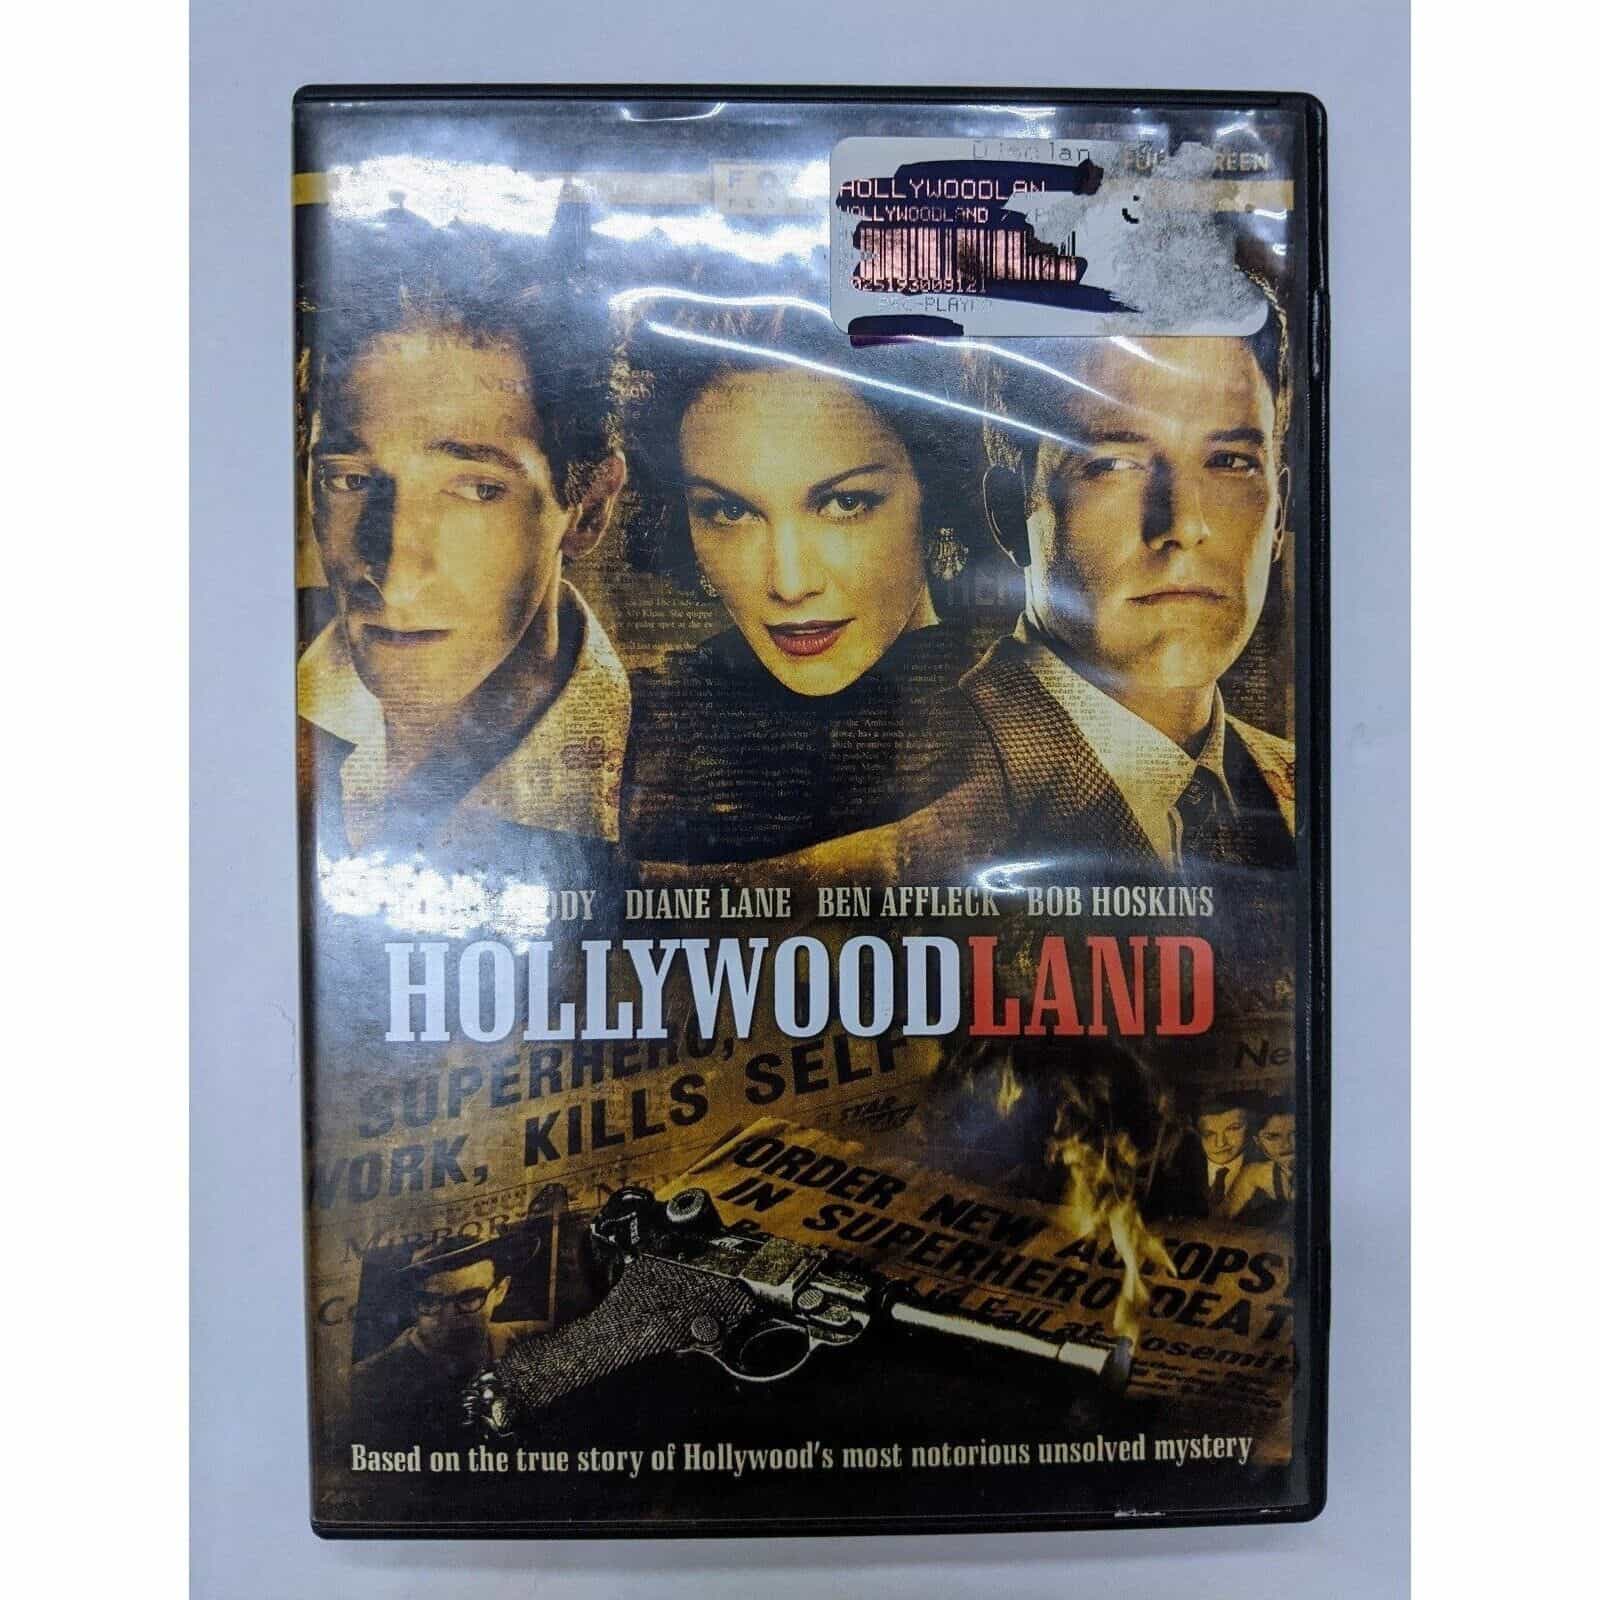 Hollywoodland DVD movie – Fullscreen version